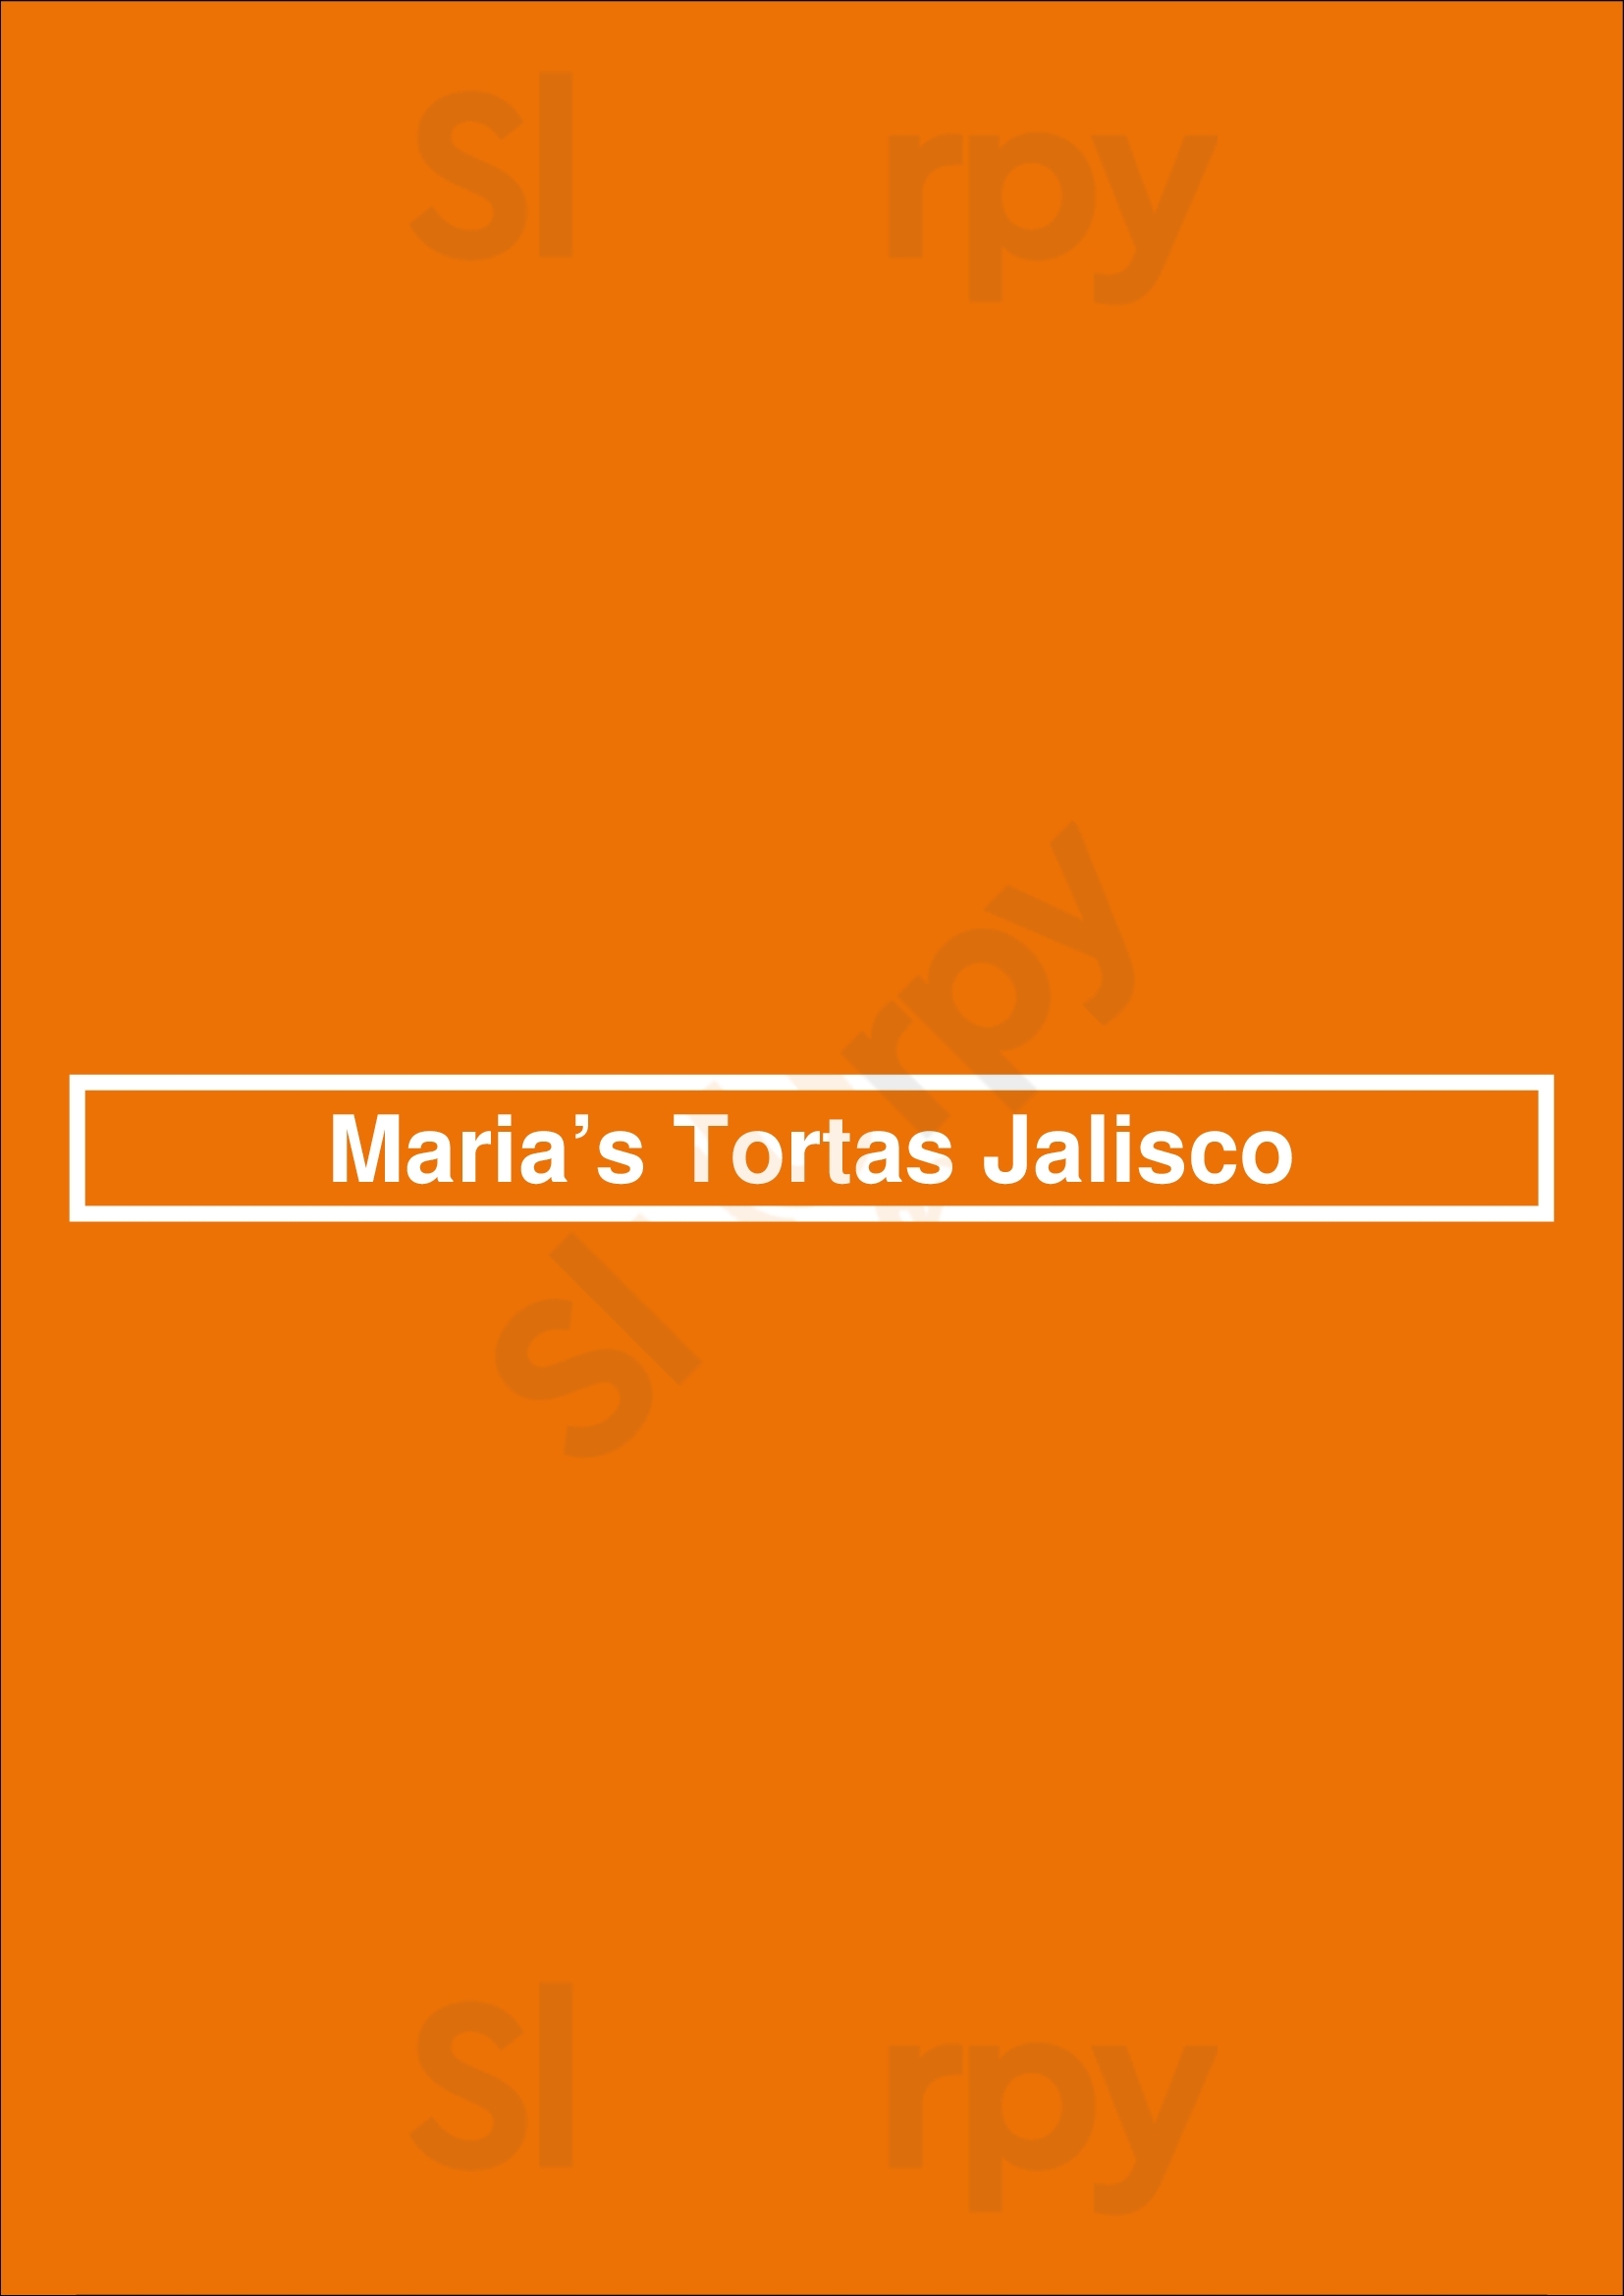 Maria’s Tortas Jalisco Stoney Creek Menu - 1